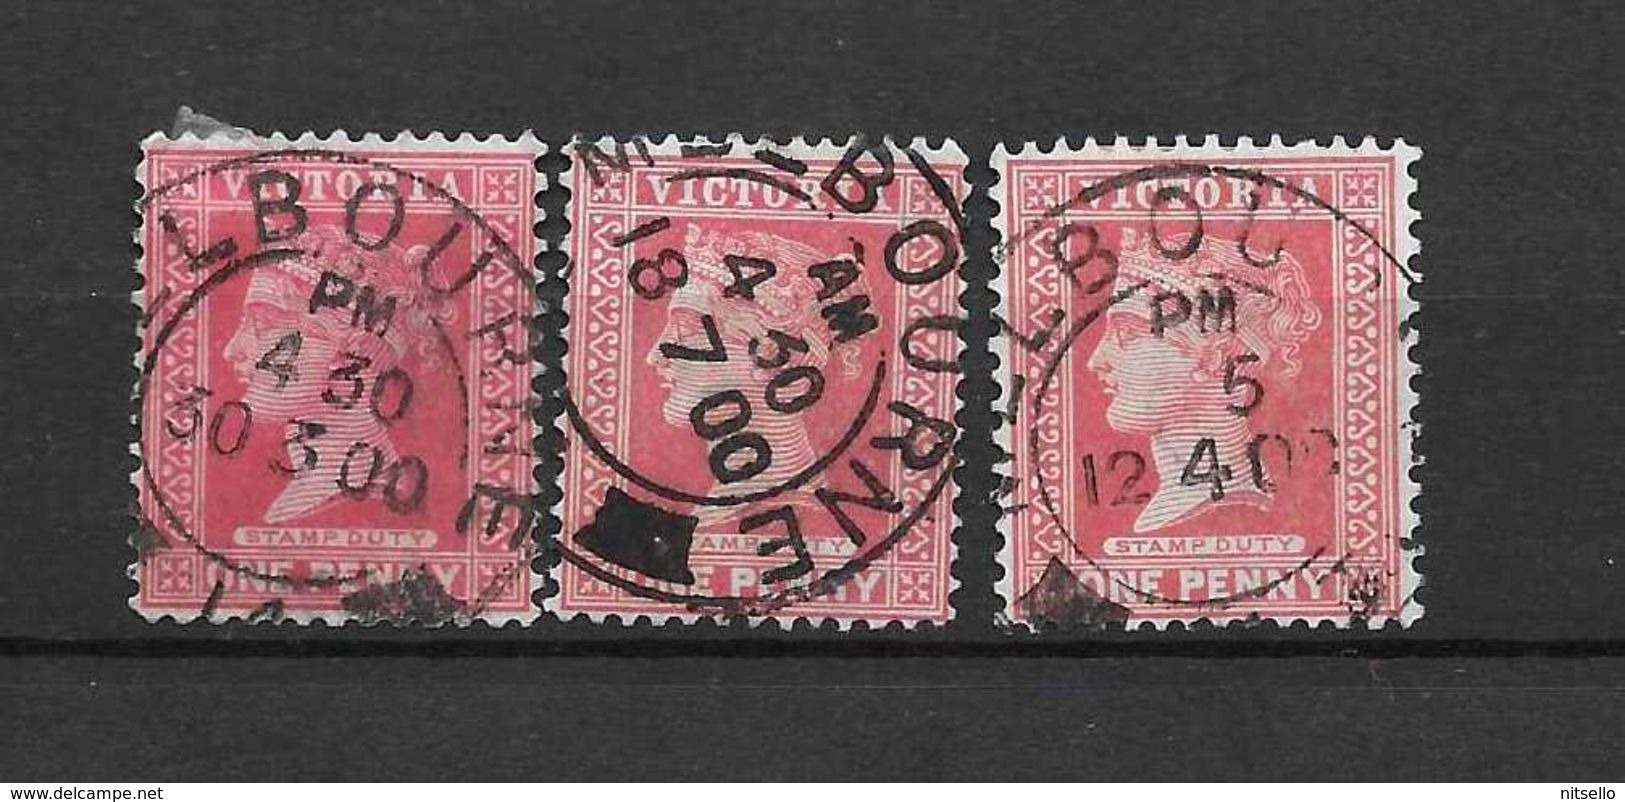 LOTE 1526   ///  (C020)  AUSTRALIA   VICTORIA    CON FECHADOR DE MELBOURNE - Used Stamps